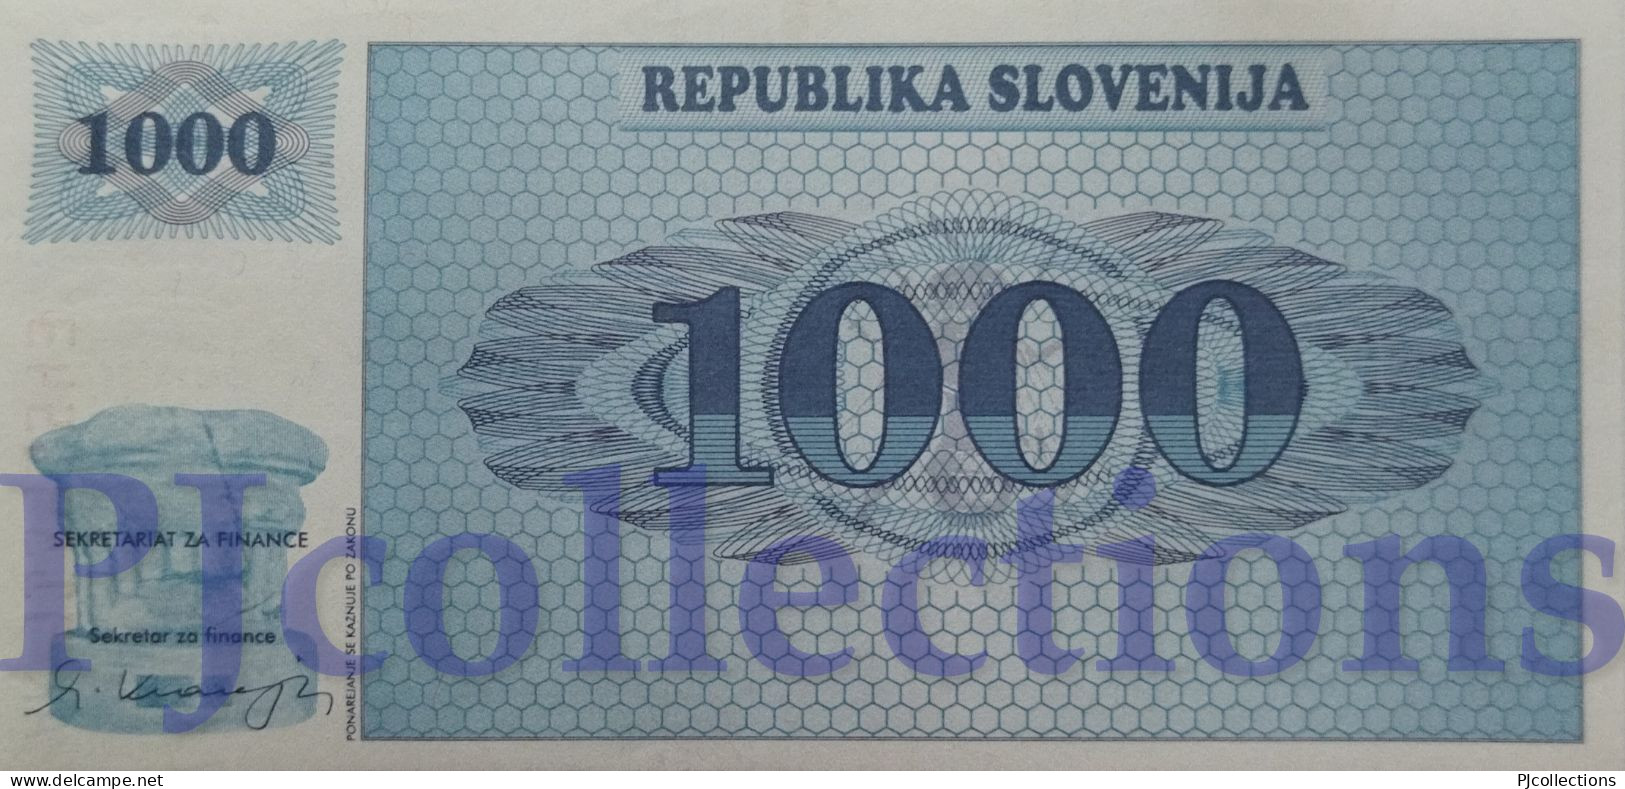 SLOVENIA 1000 TOLARJEV 1991 PICK 9a AU/UNC RARE - Slowenien